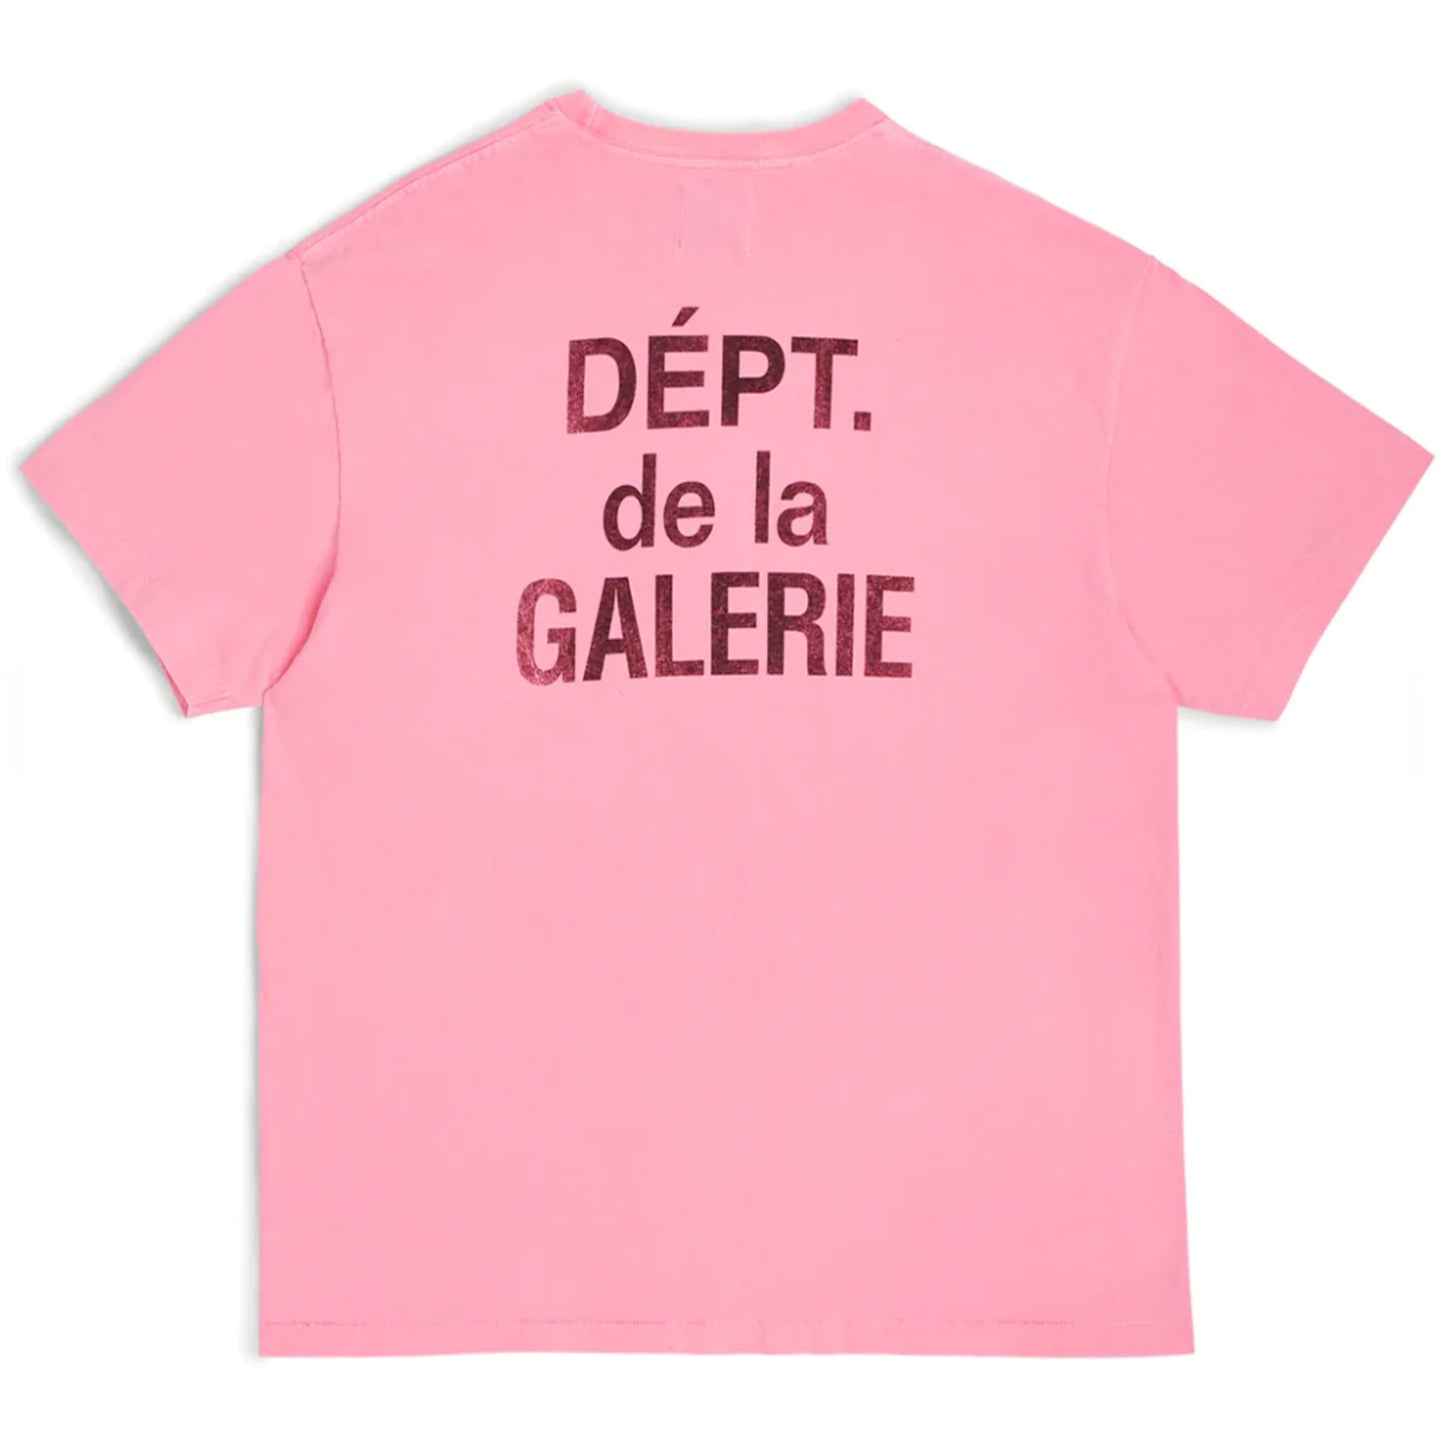 GALLERY DEPT. FRENCH SOUVENIR FLO NEON PINK TEE